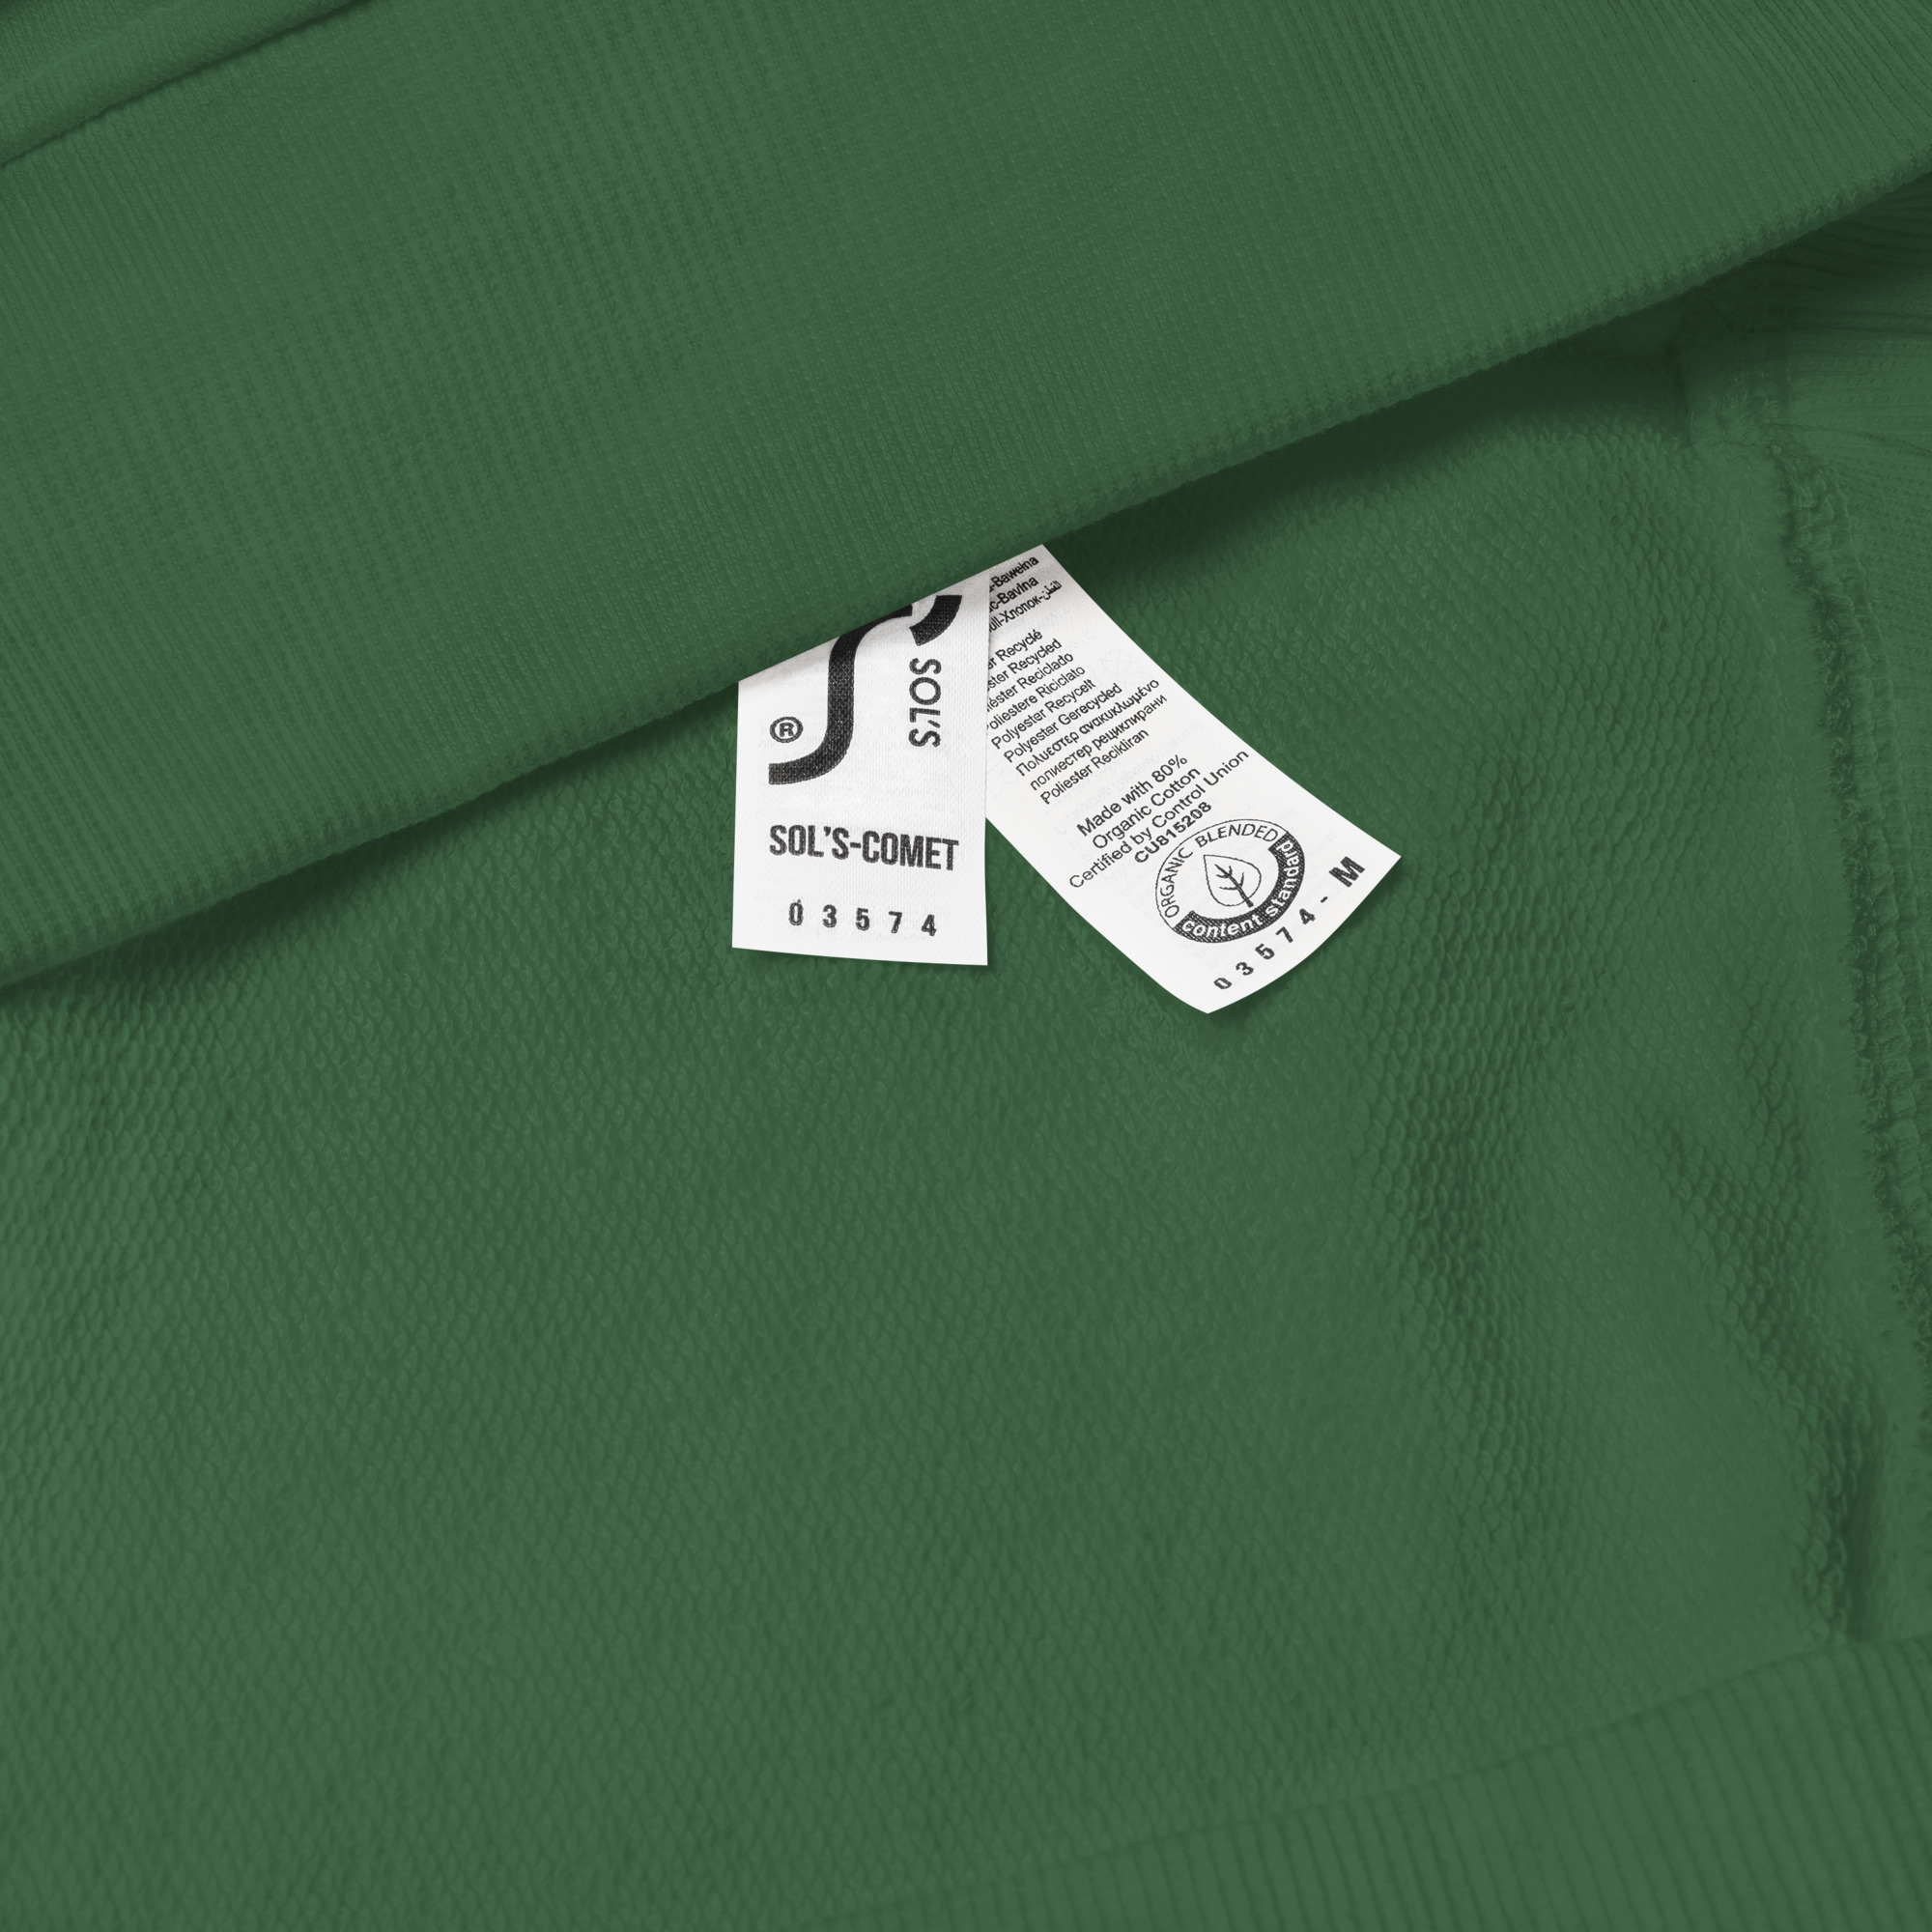 unisex-organic-sweatshirt-bottle-green-product-details-2-64200a7836536.jpg